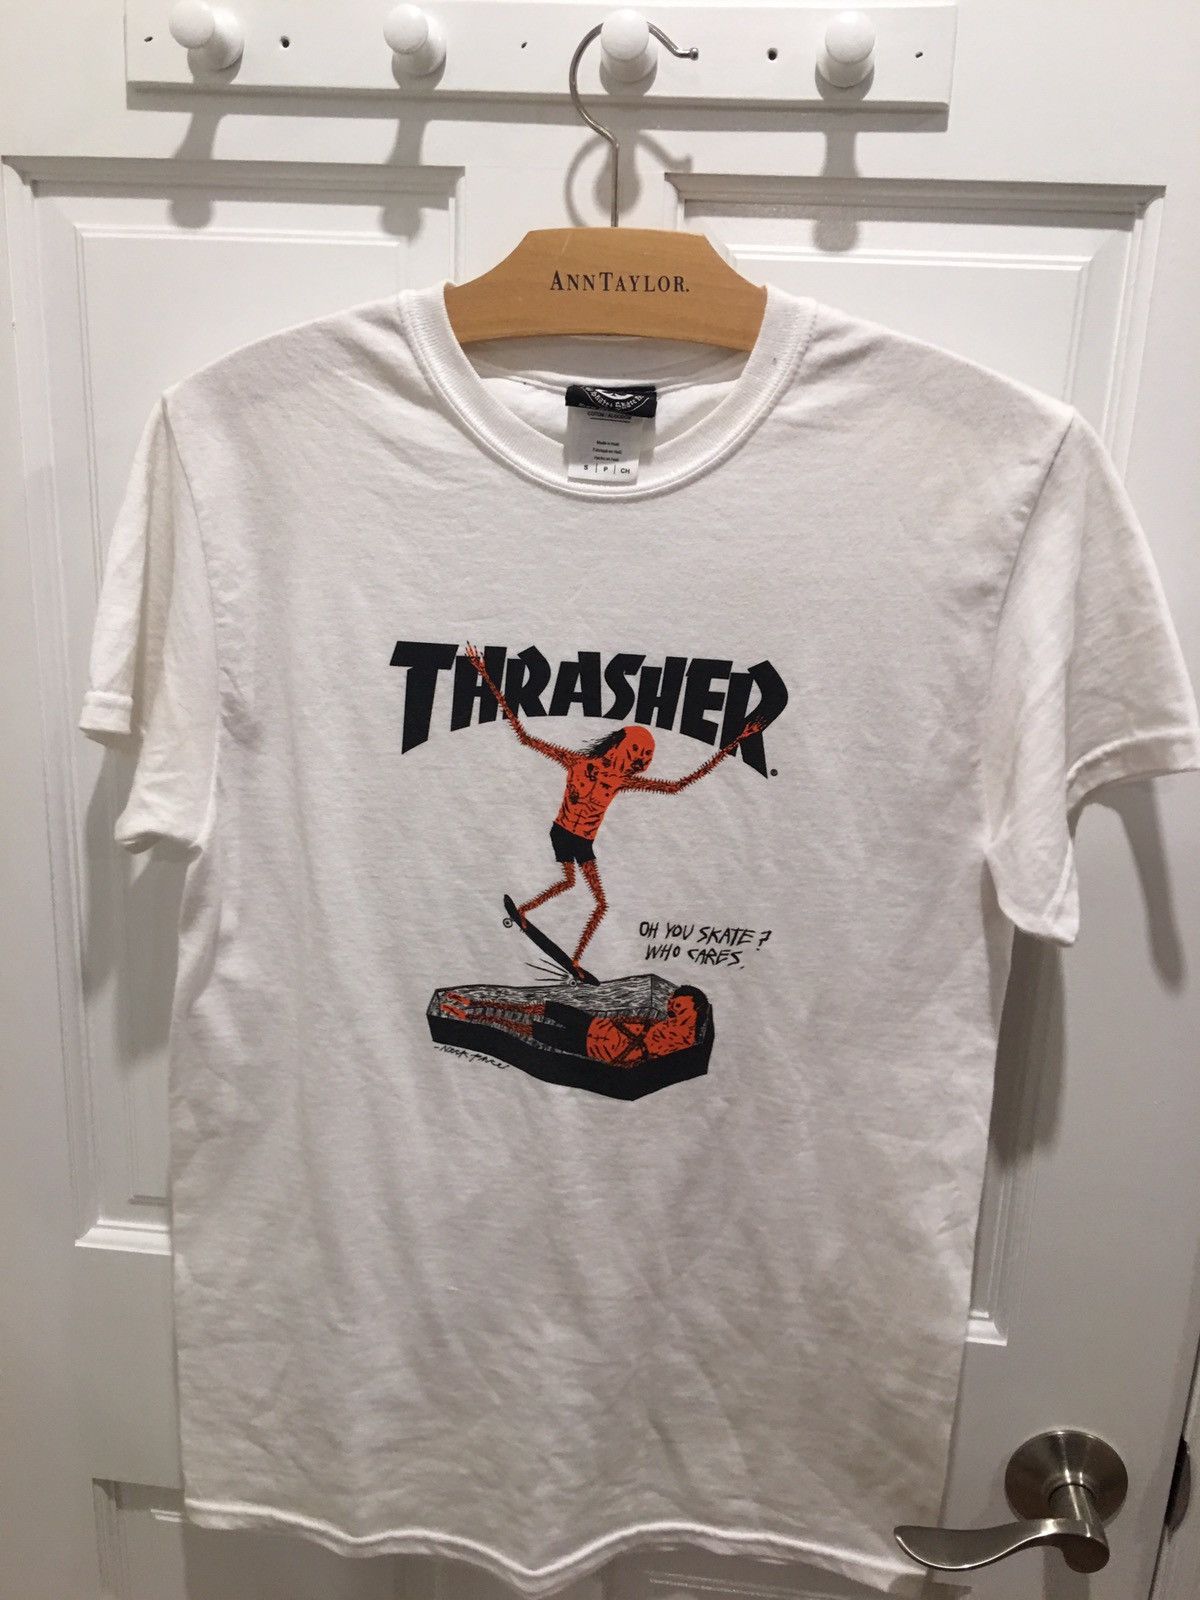 Thrasher Thrasher Demon Tshirt Size US S / EU 44-46 / 1 - 1 Preview